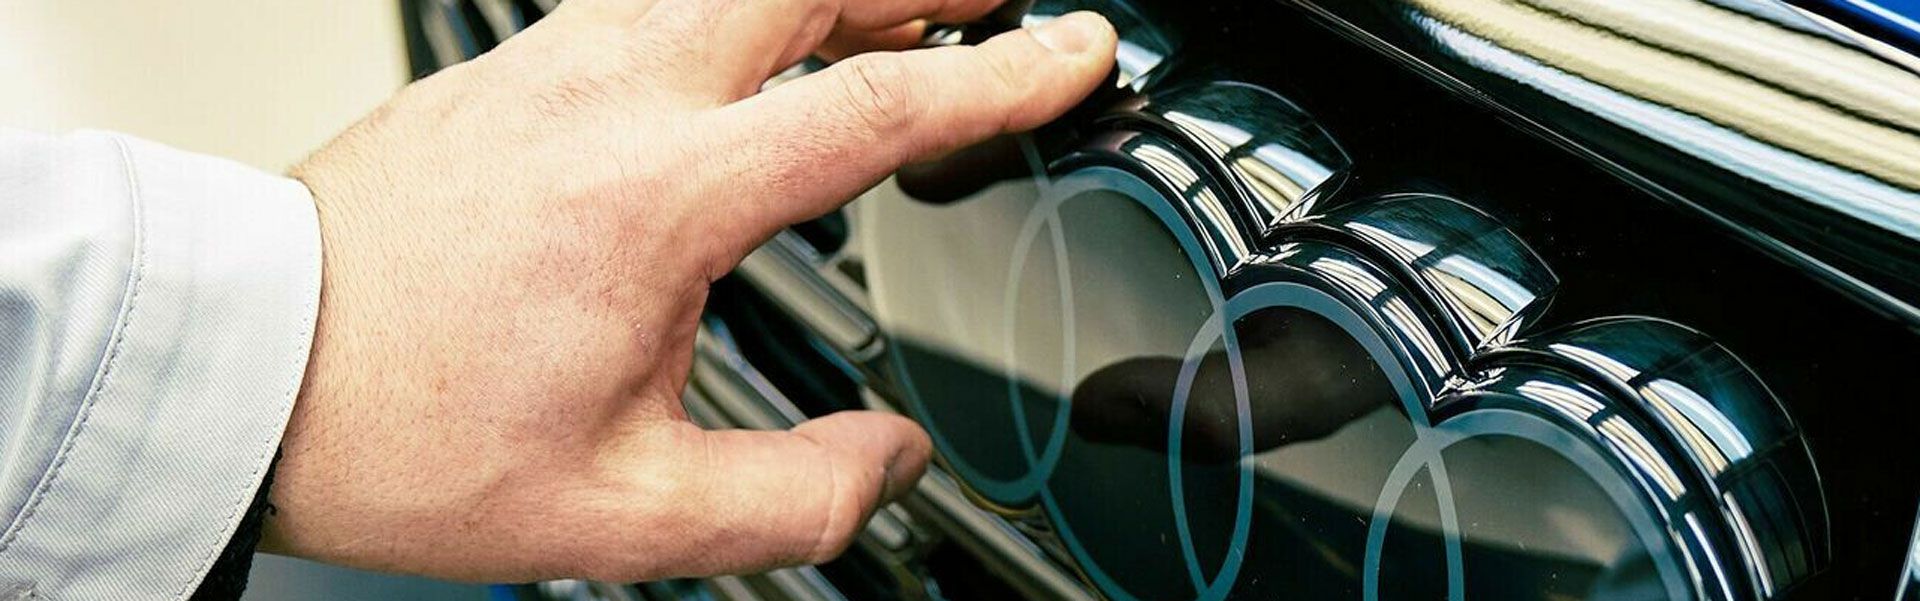 Hand berührt das Audi Logo an einem Fahrzeug